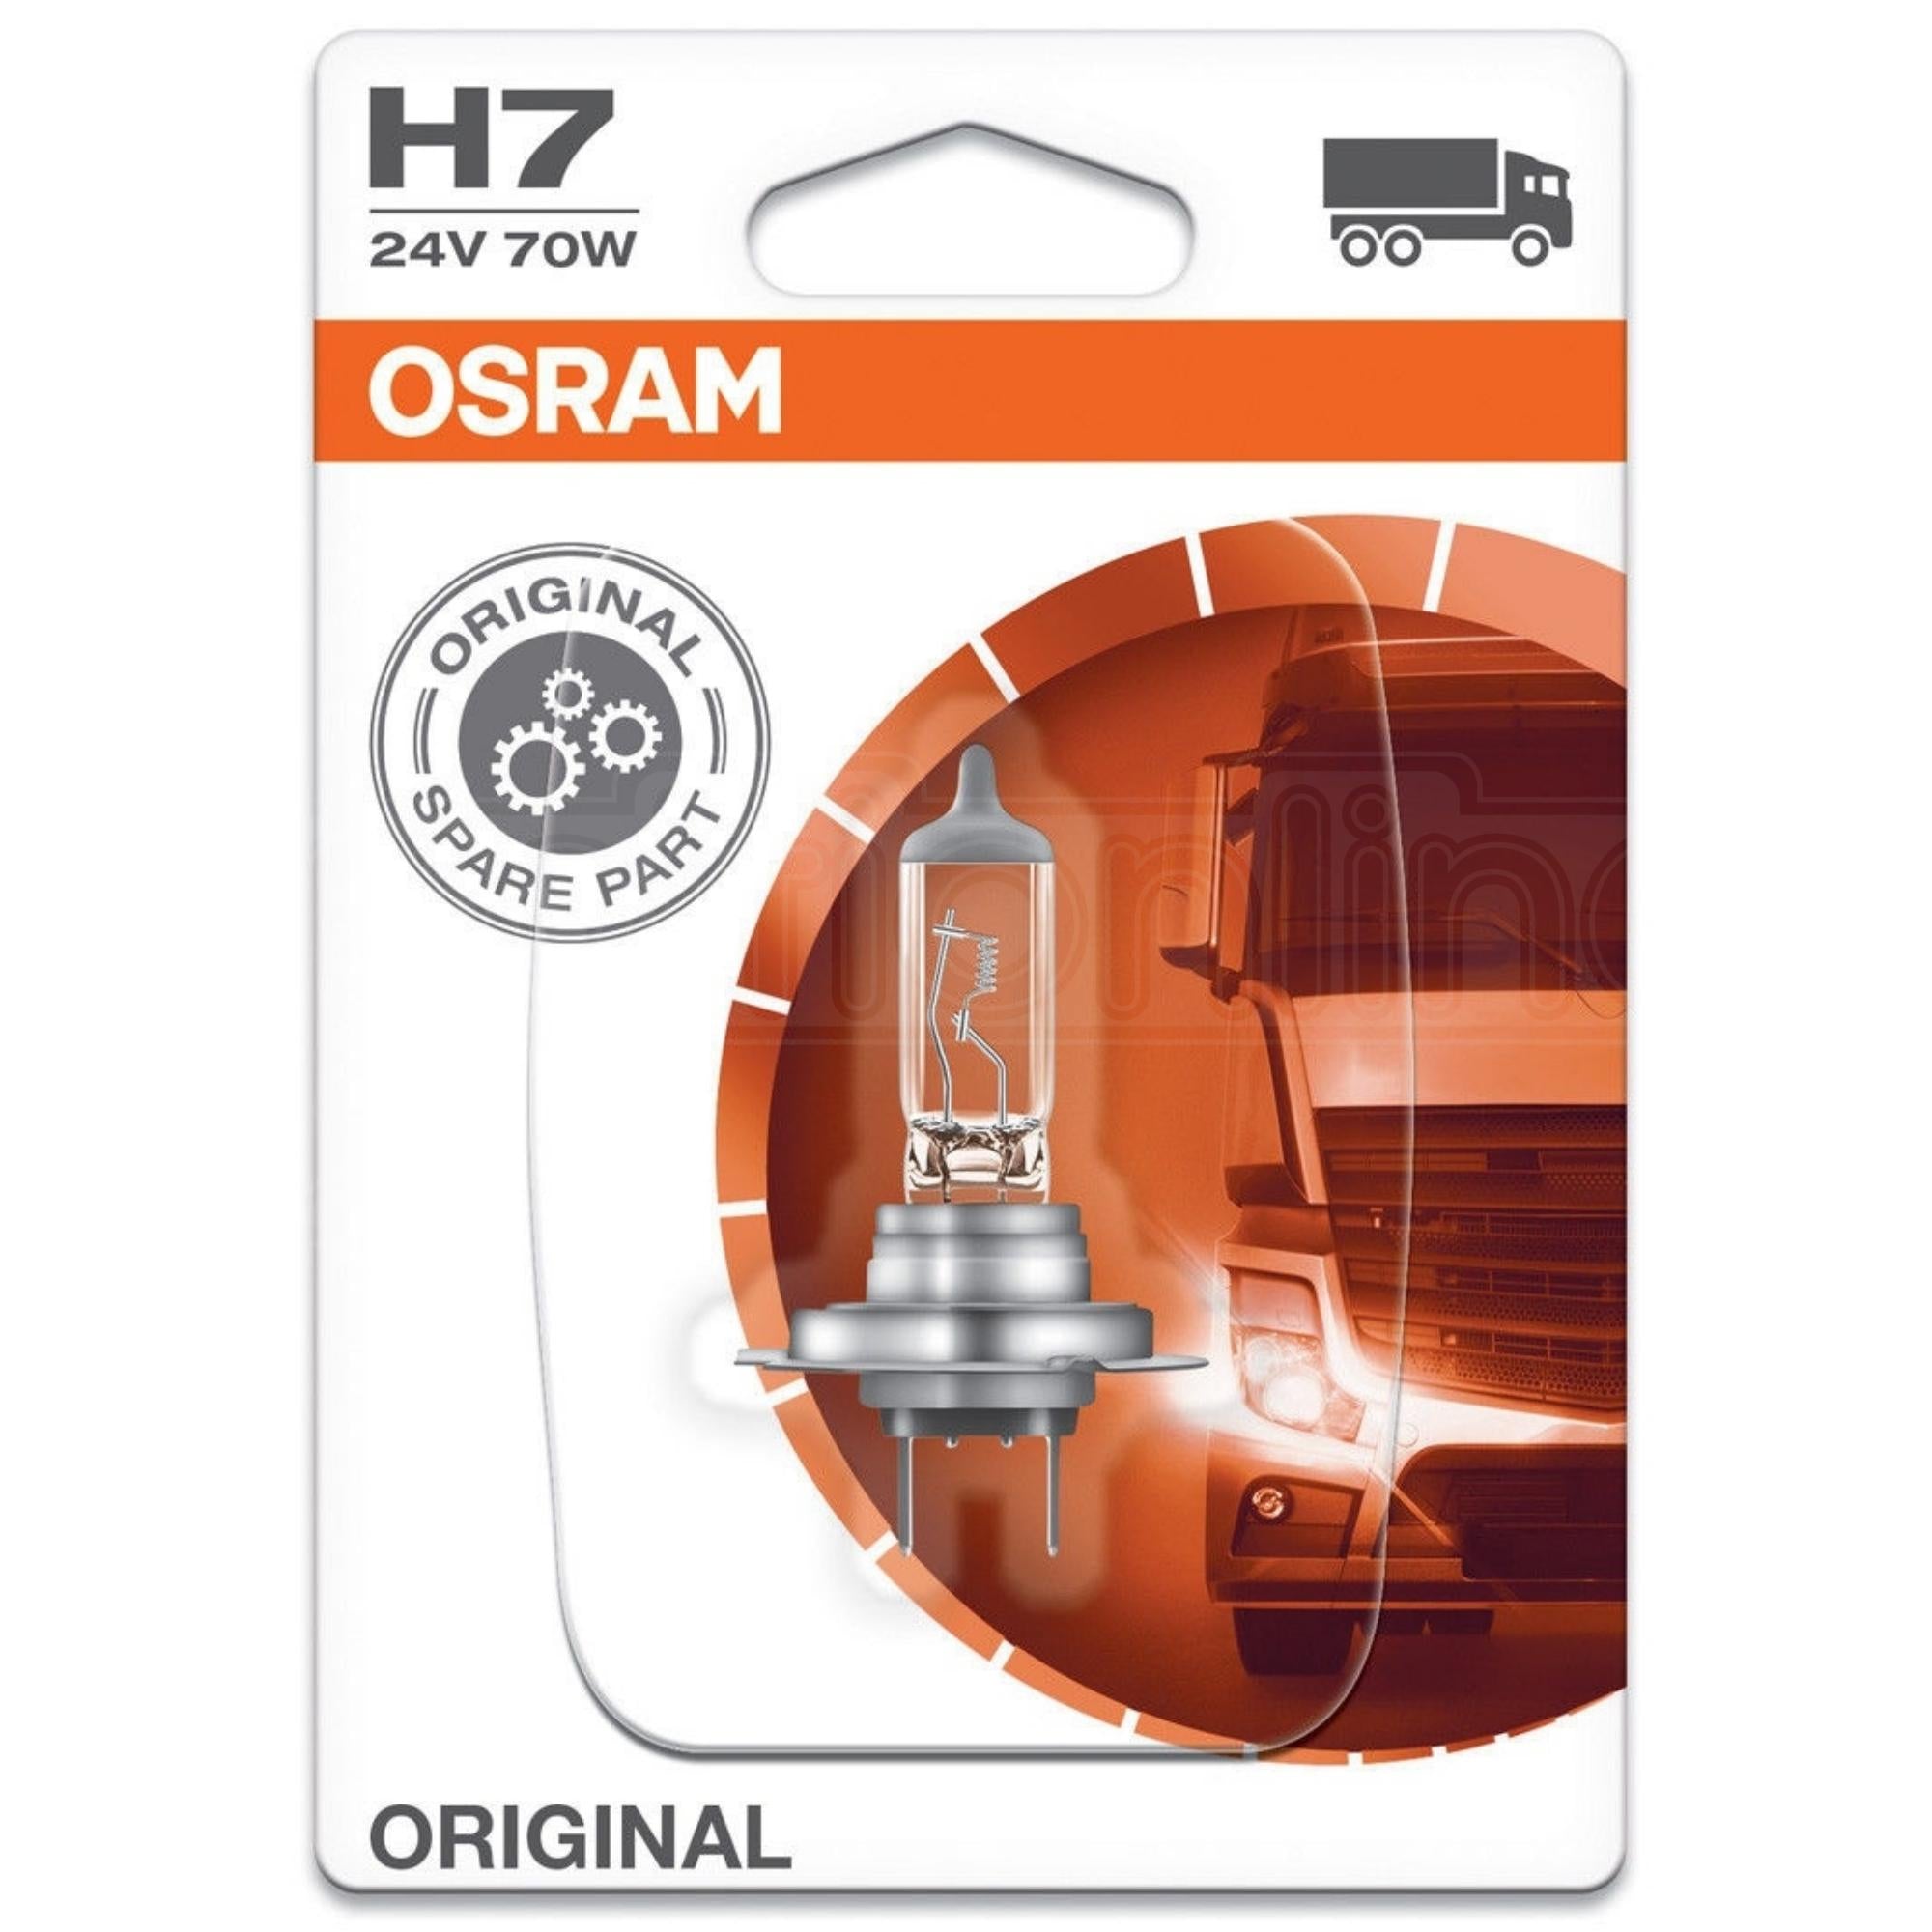 Osram H7 Truck 24V 70W Headlight Bulb